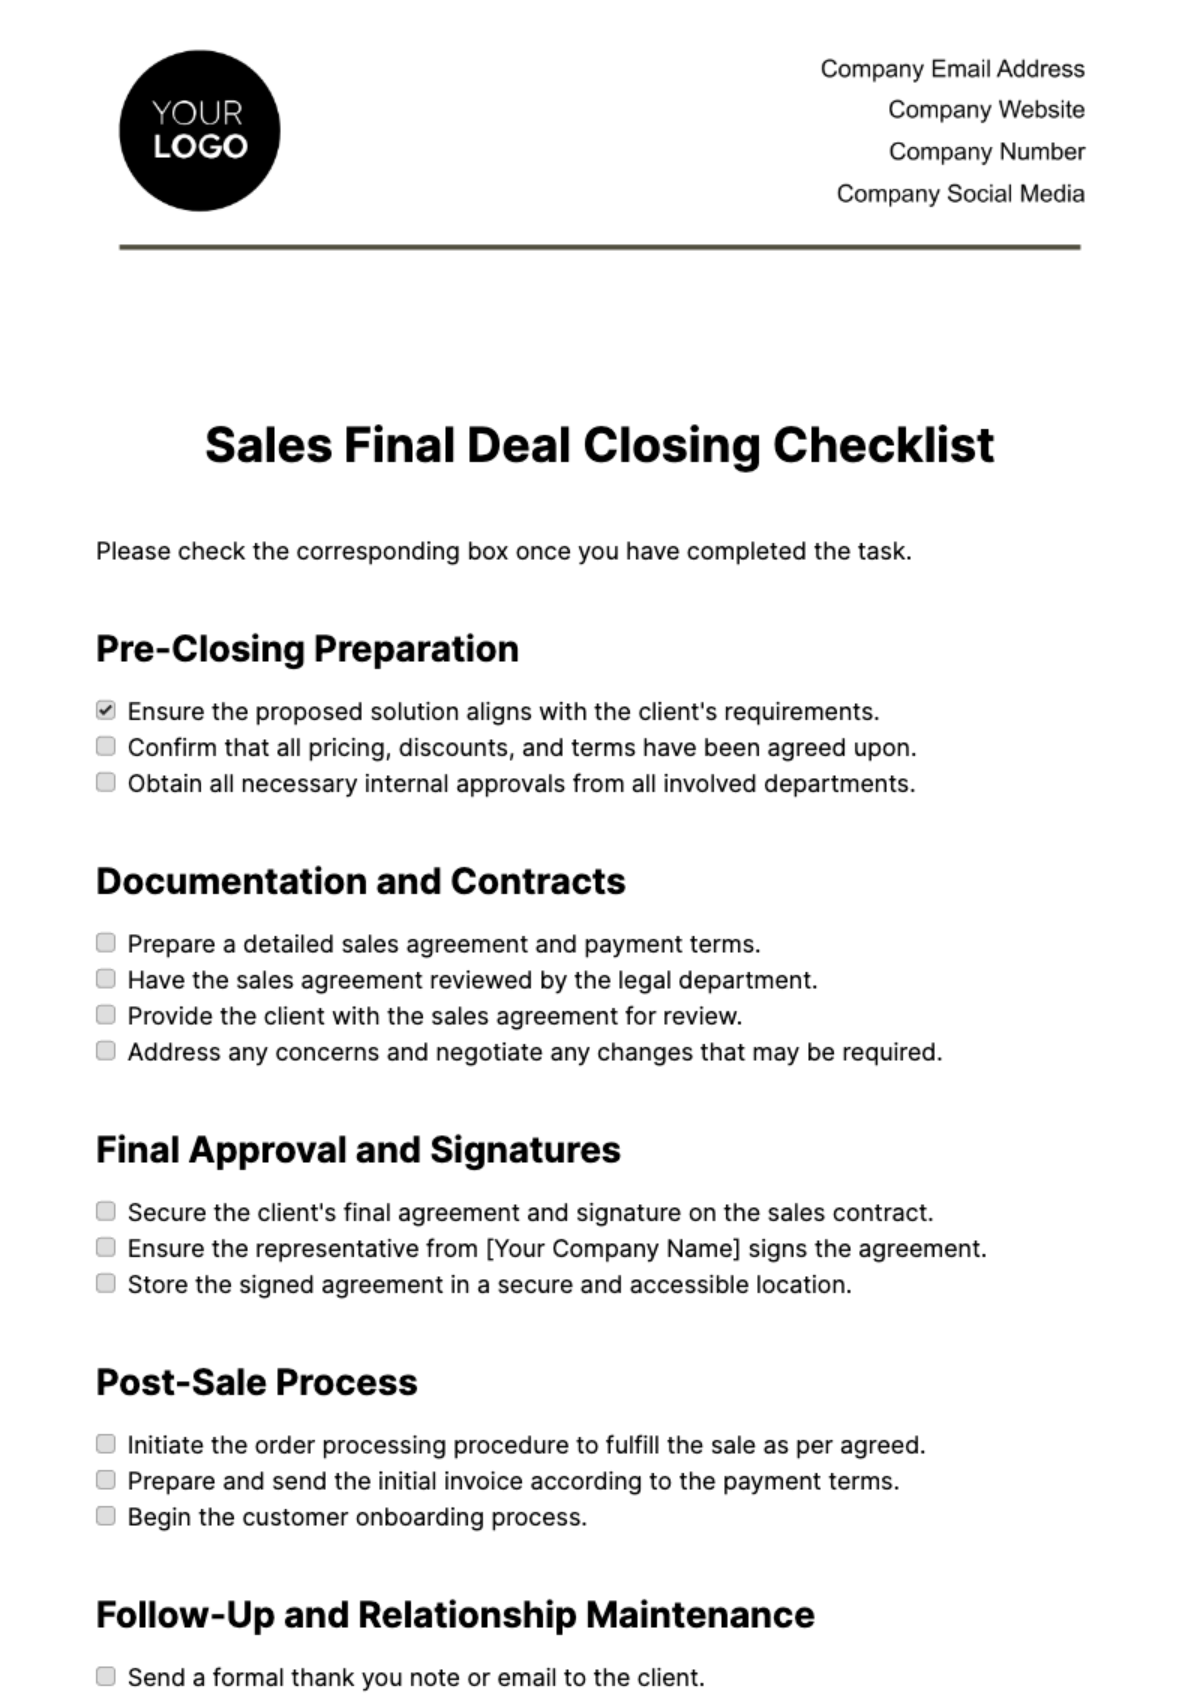 Sales Final Deal Closing Checklist Template